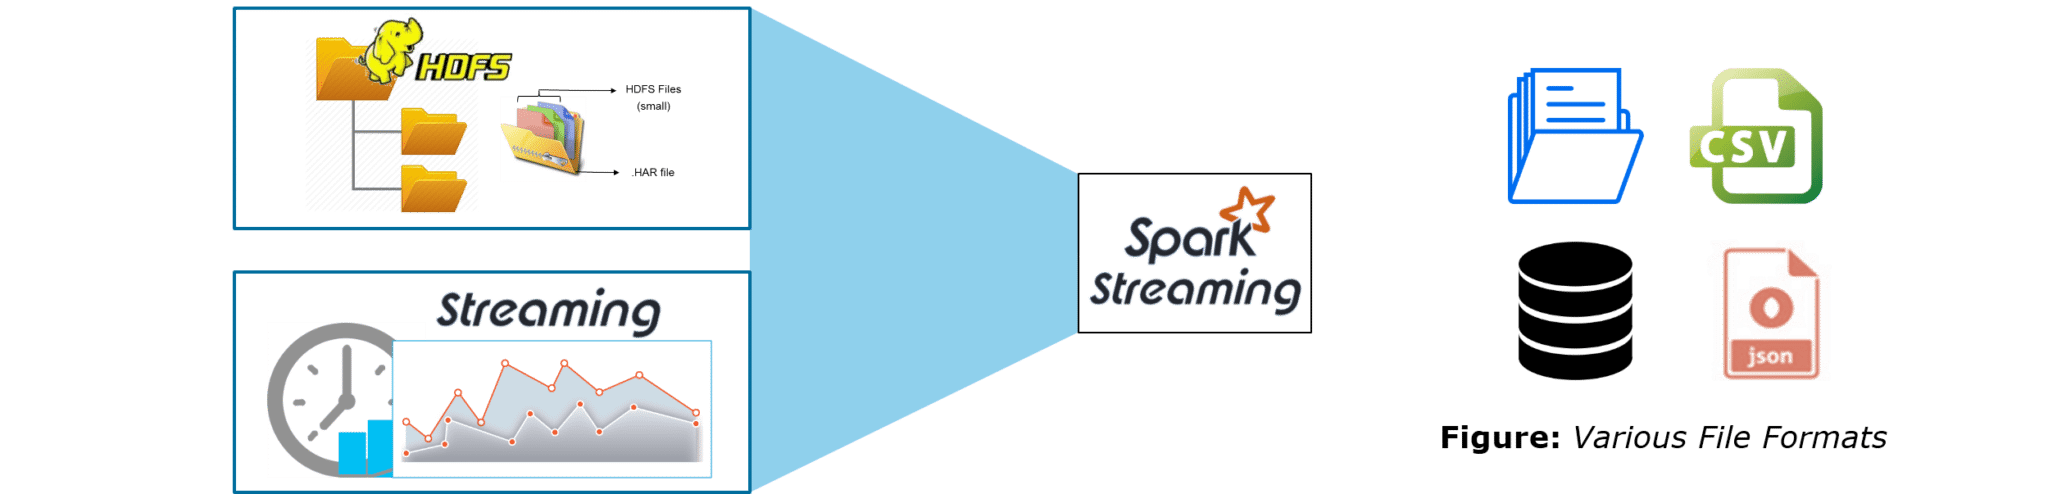 Spark MLlib | Machine Learning In 